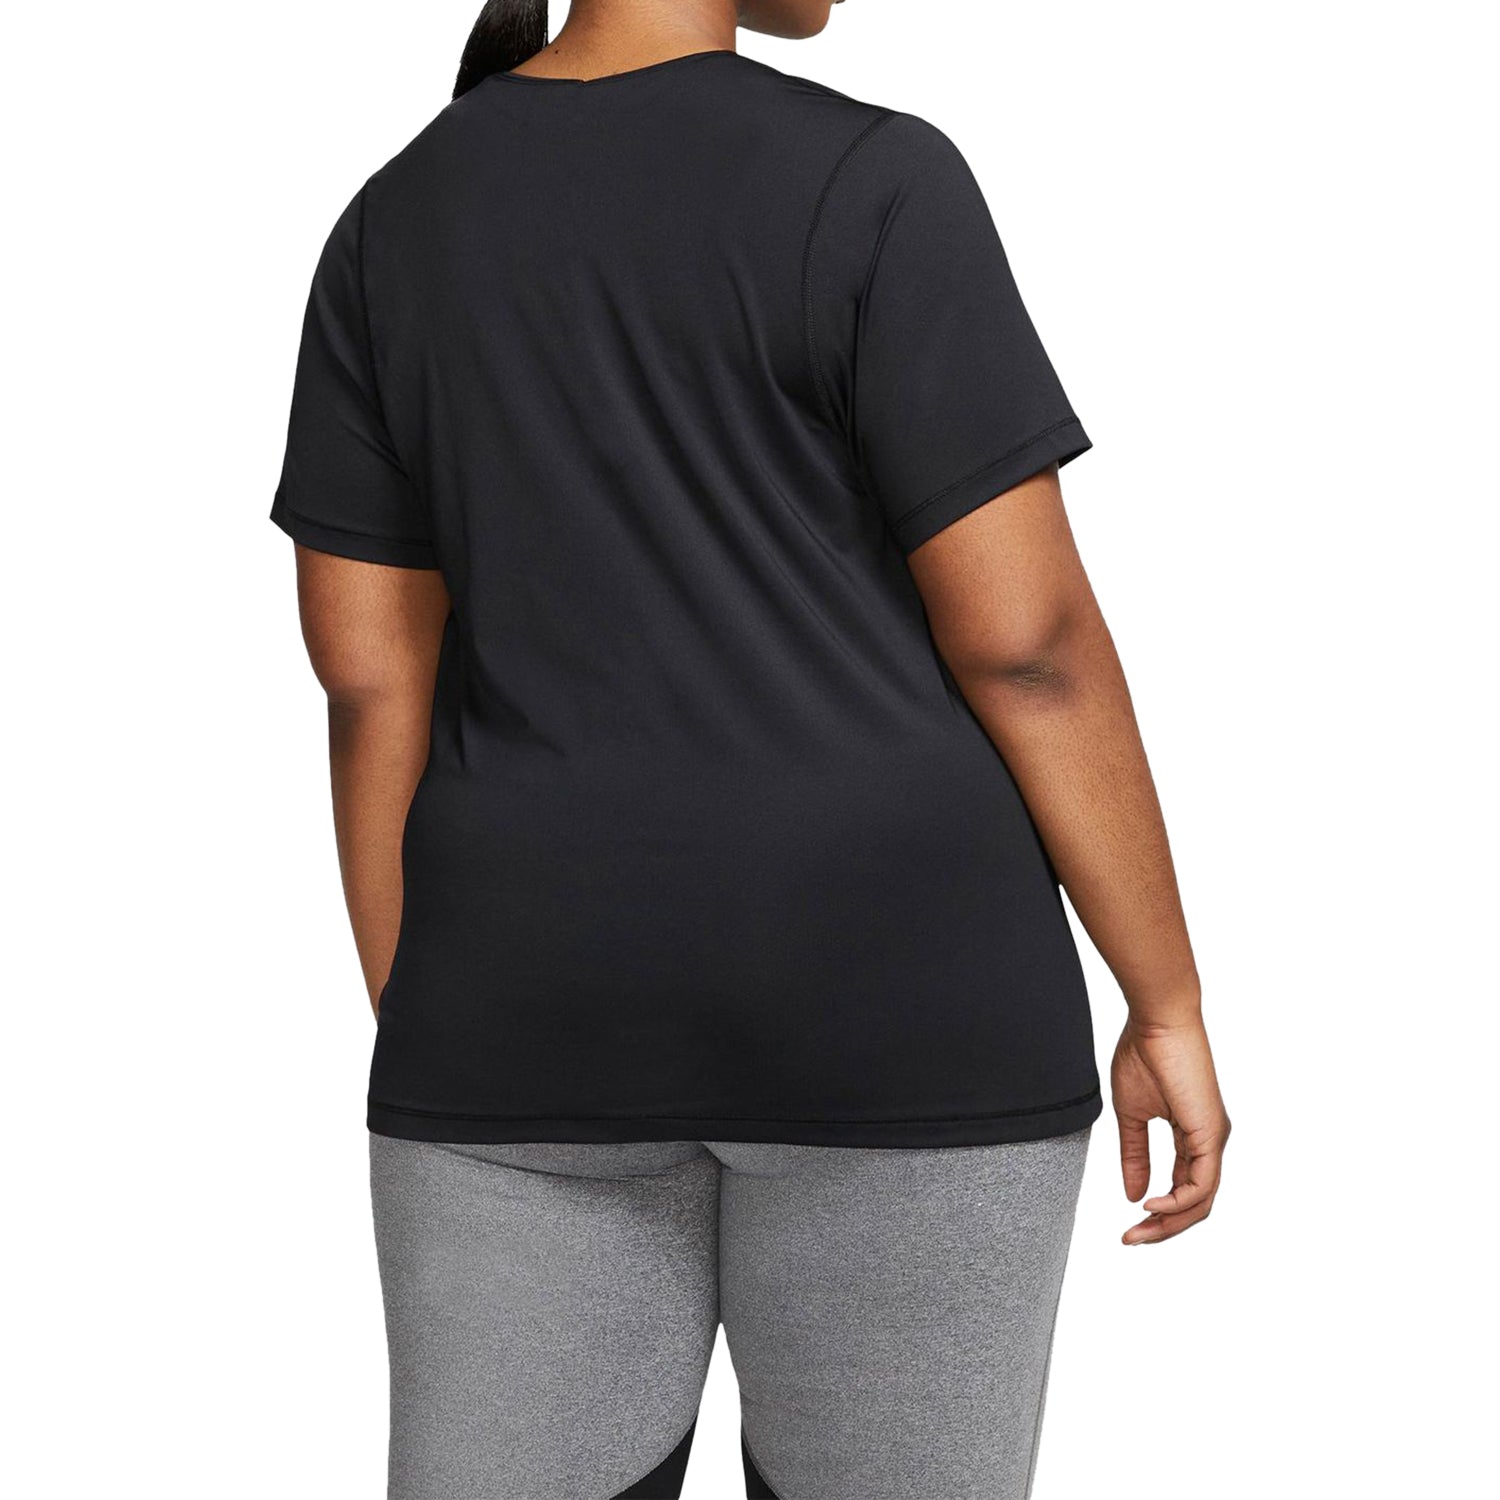 Nike Pro Mesh Top (Plus Size) Womens Style : Av9731